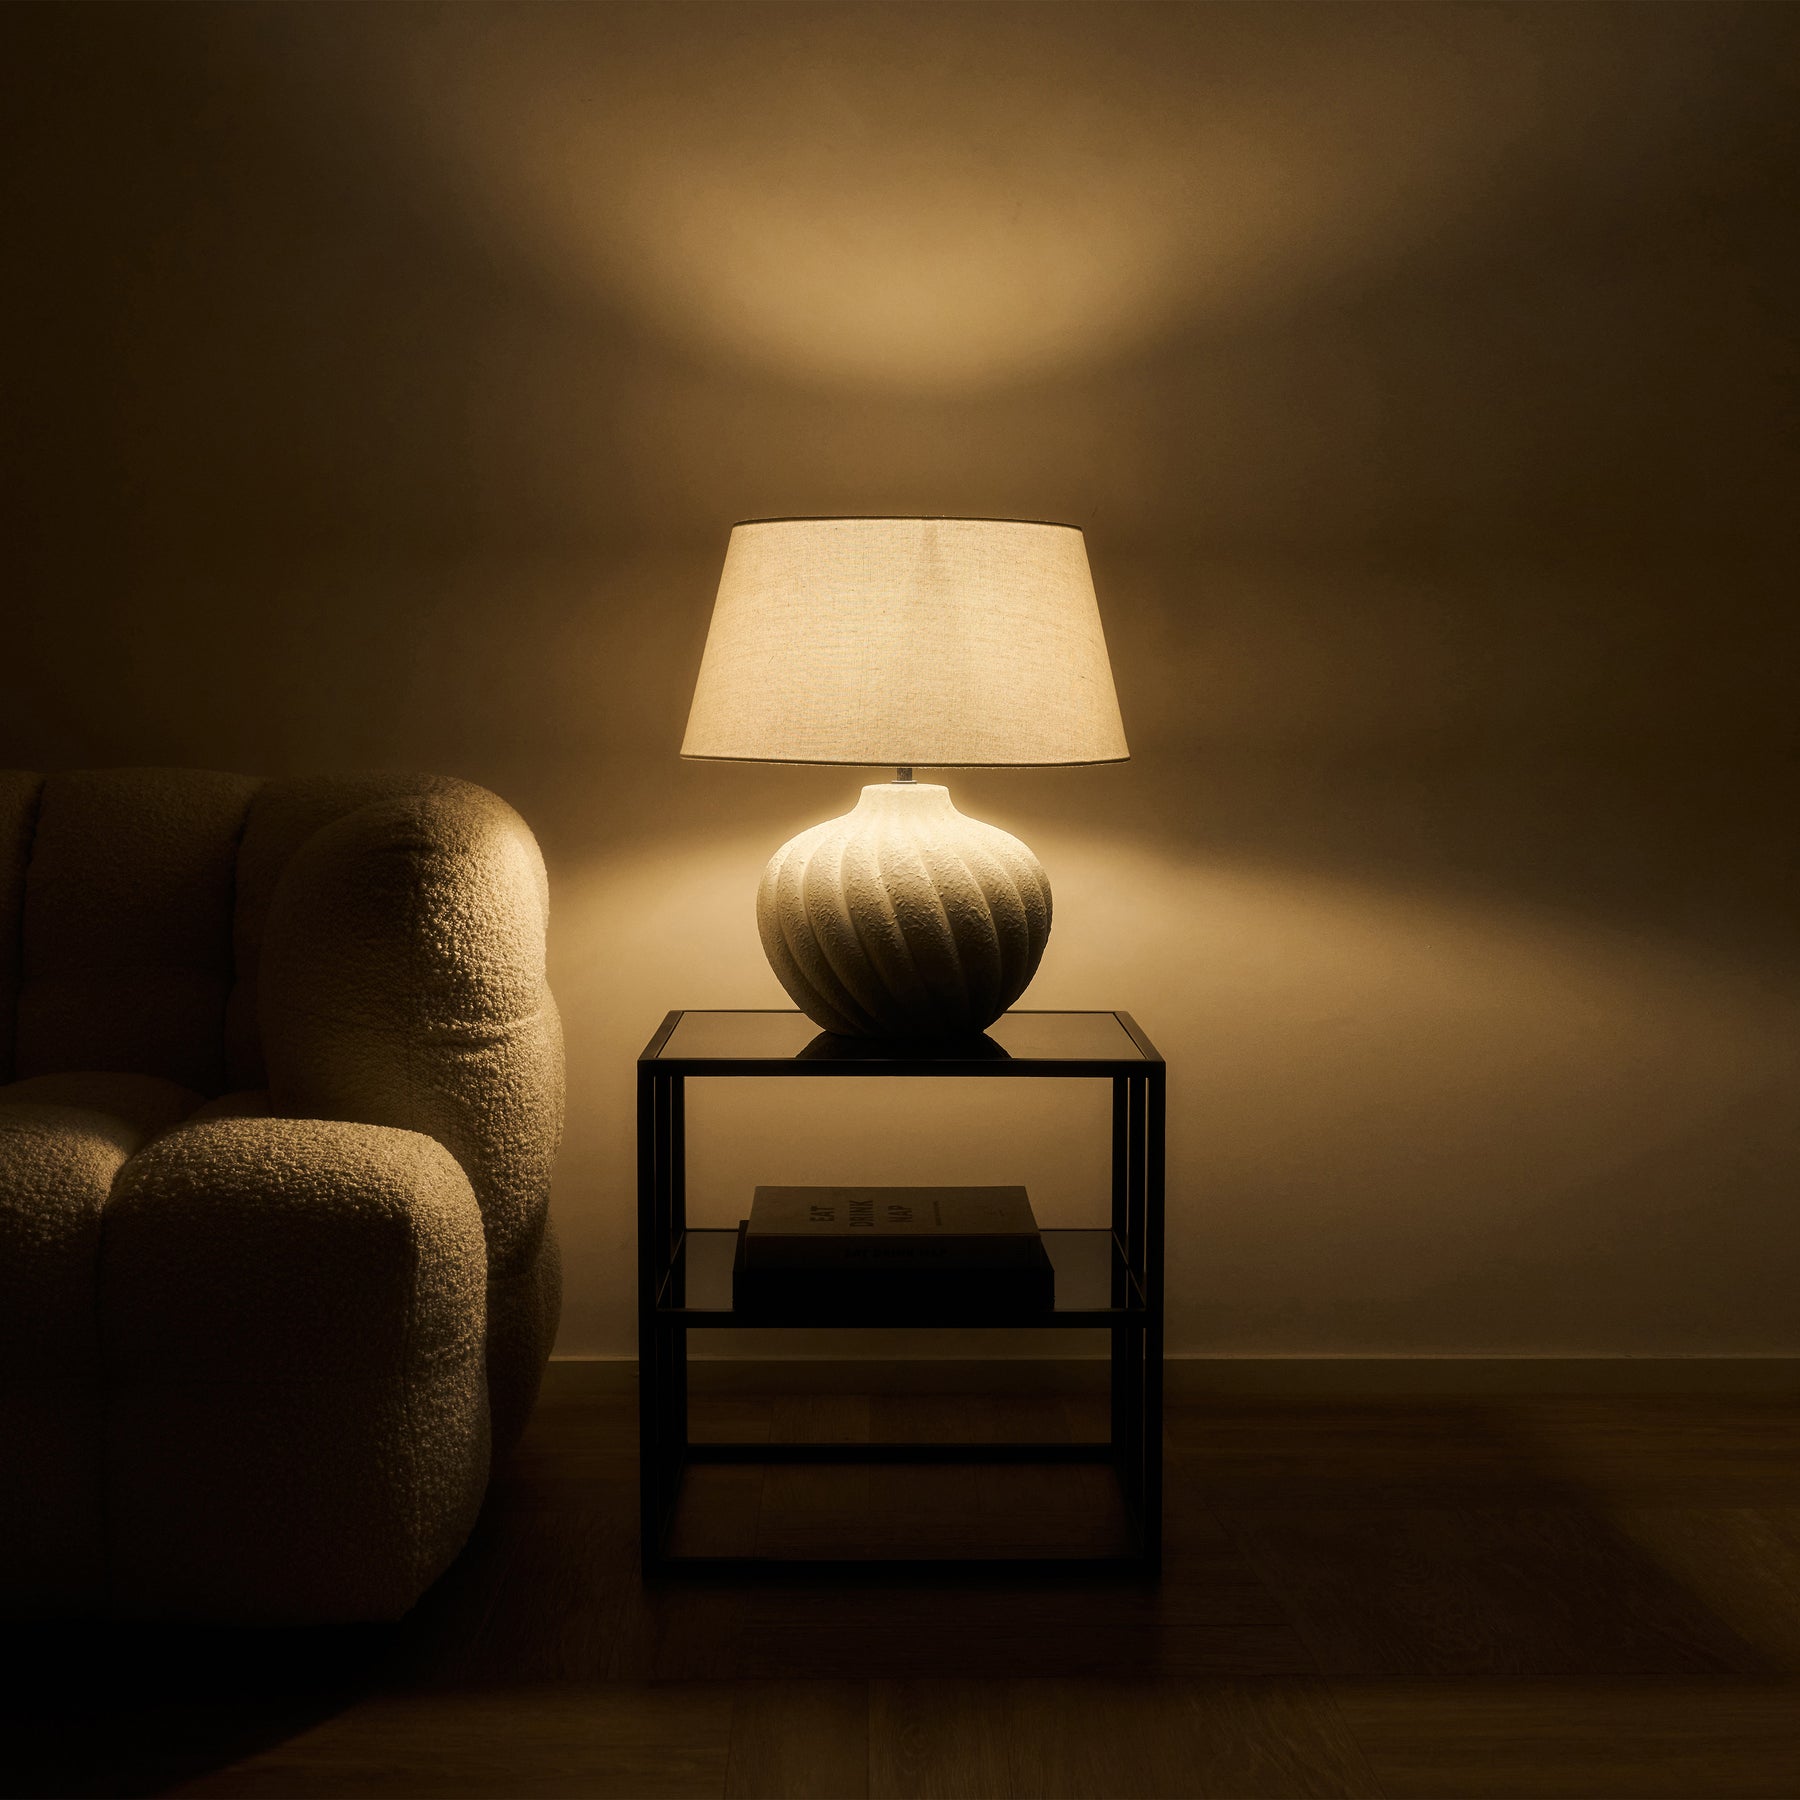 Textured ceramic based table lamp natural shade emitting warm lighting